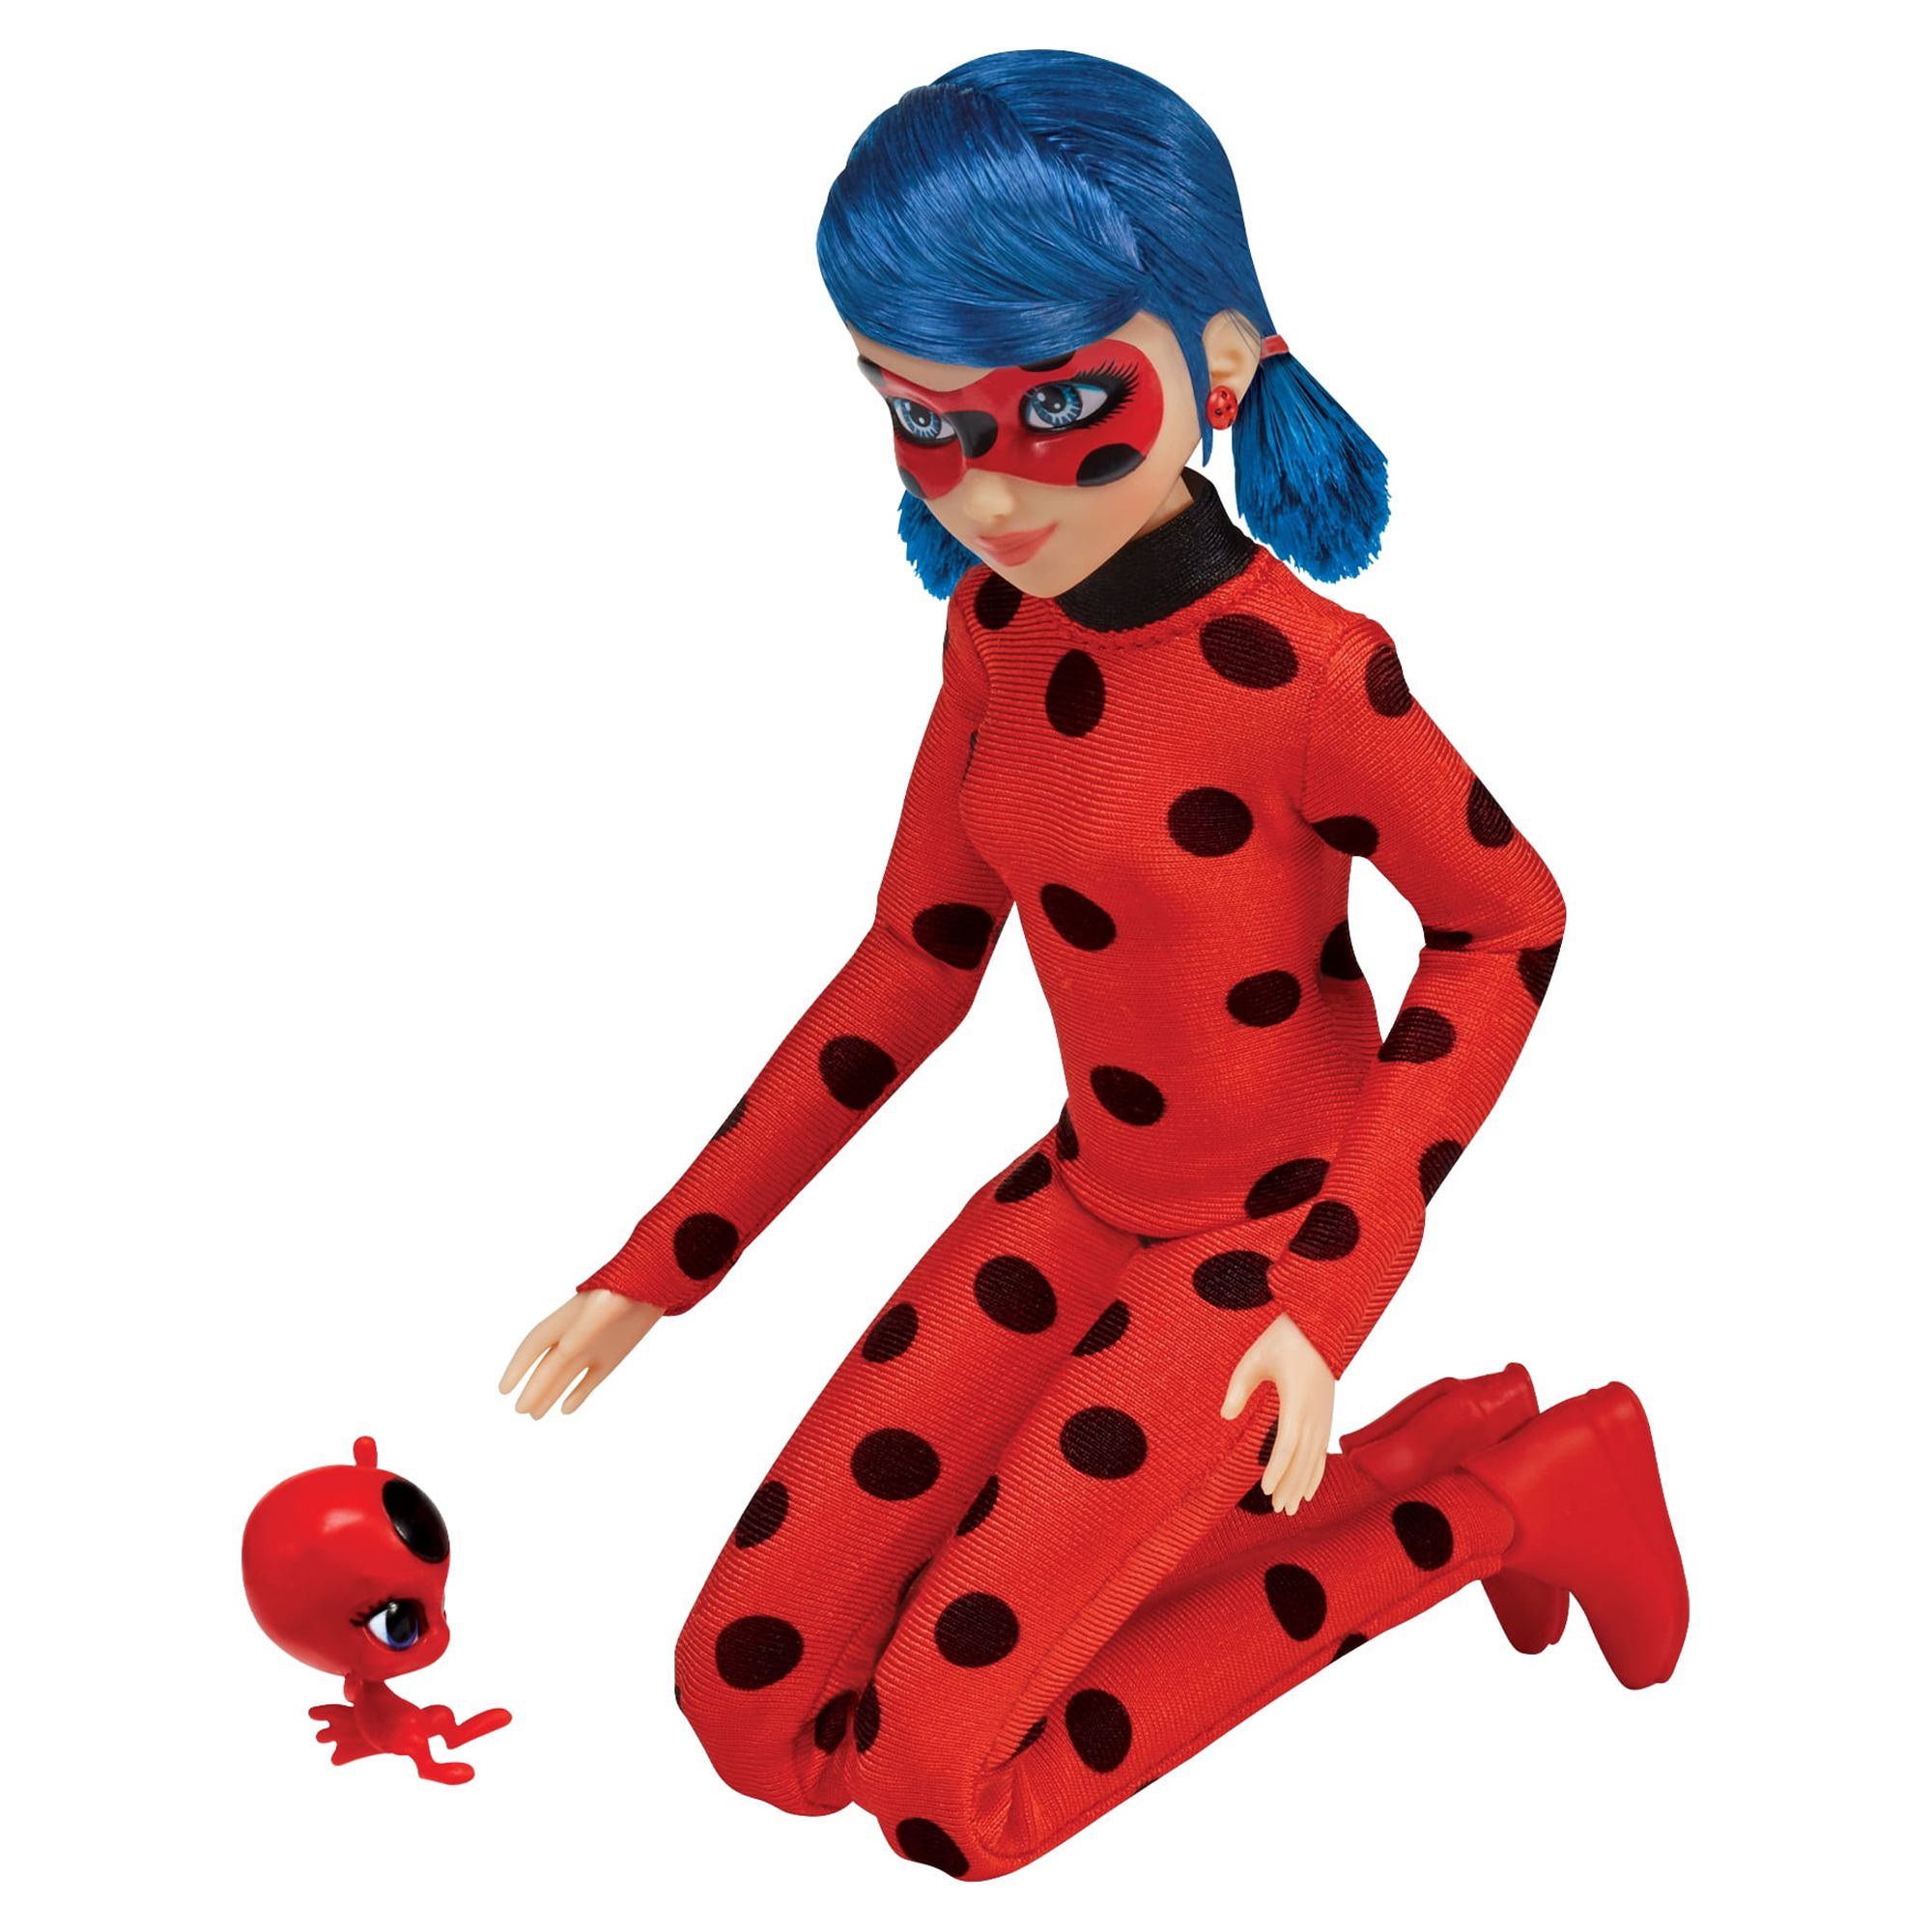 Miraculous Ladybug Doll - image 3 of 6